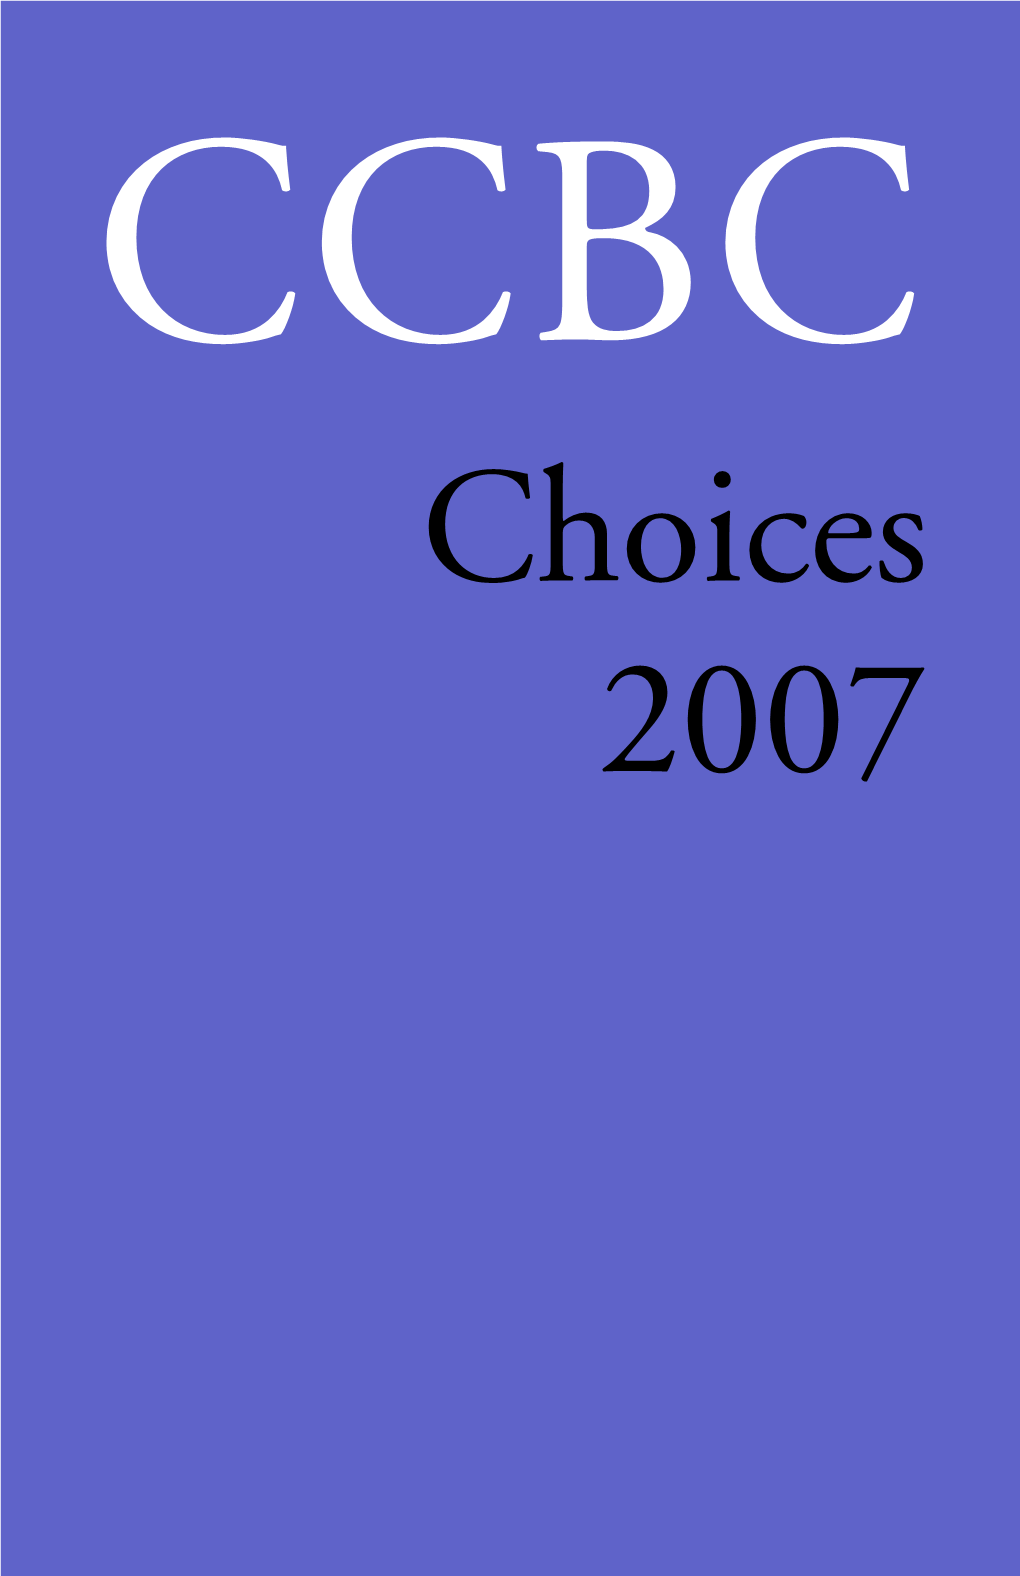 Cooperative Children's Book Center: Choices 2007